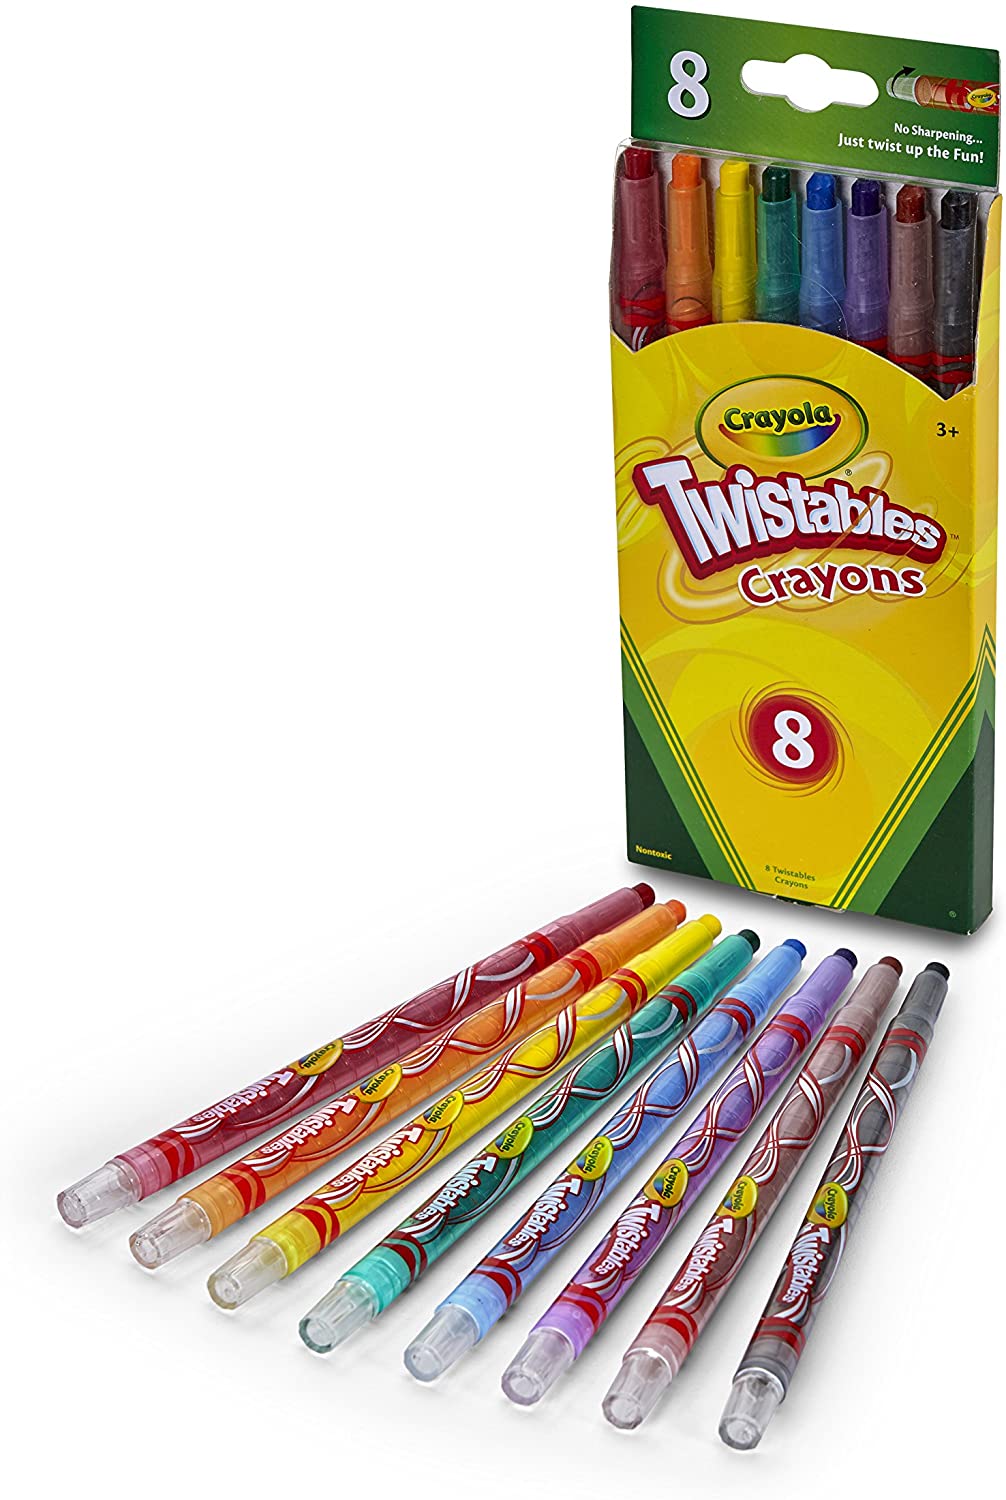 Crayola Washable Crayons (526924)